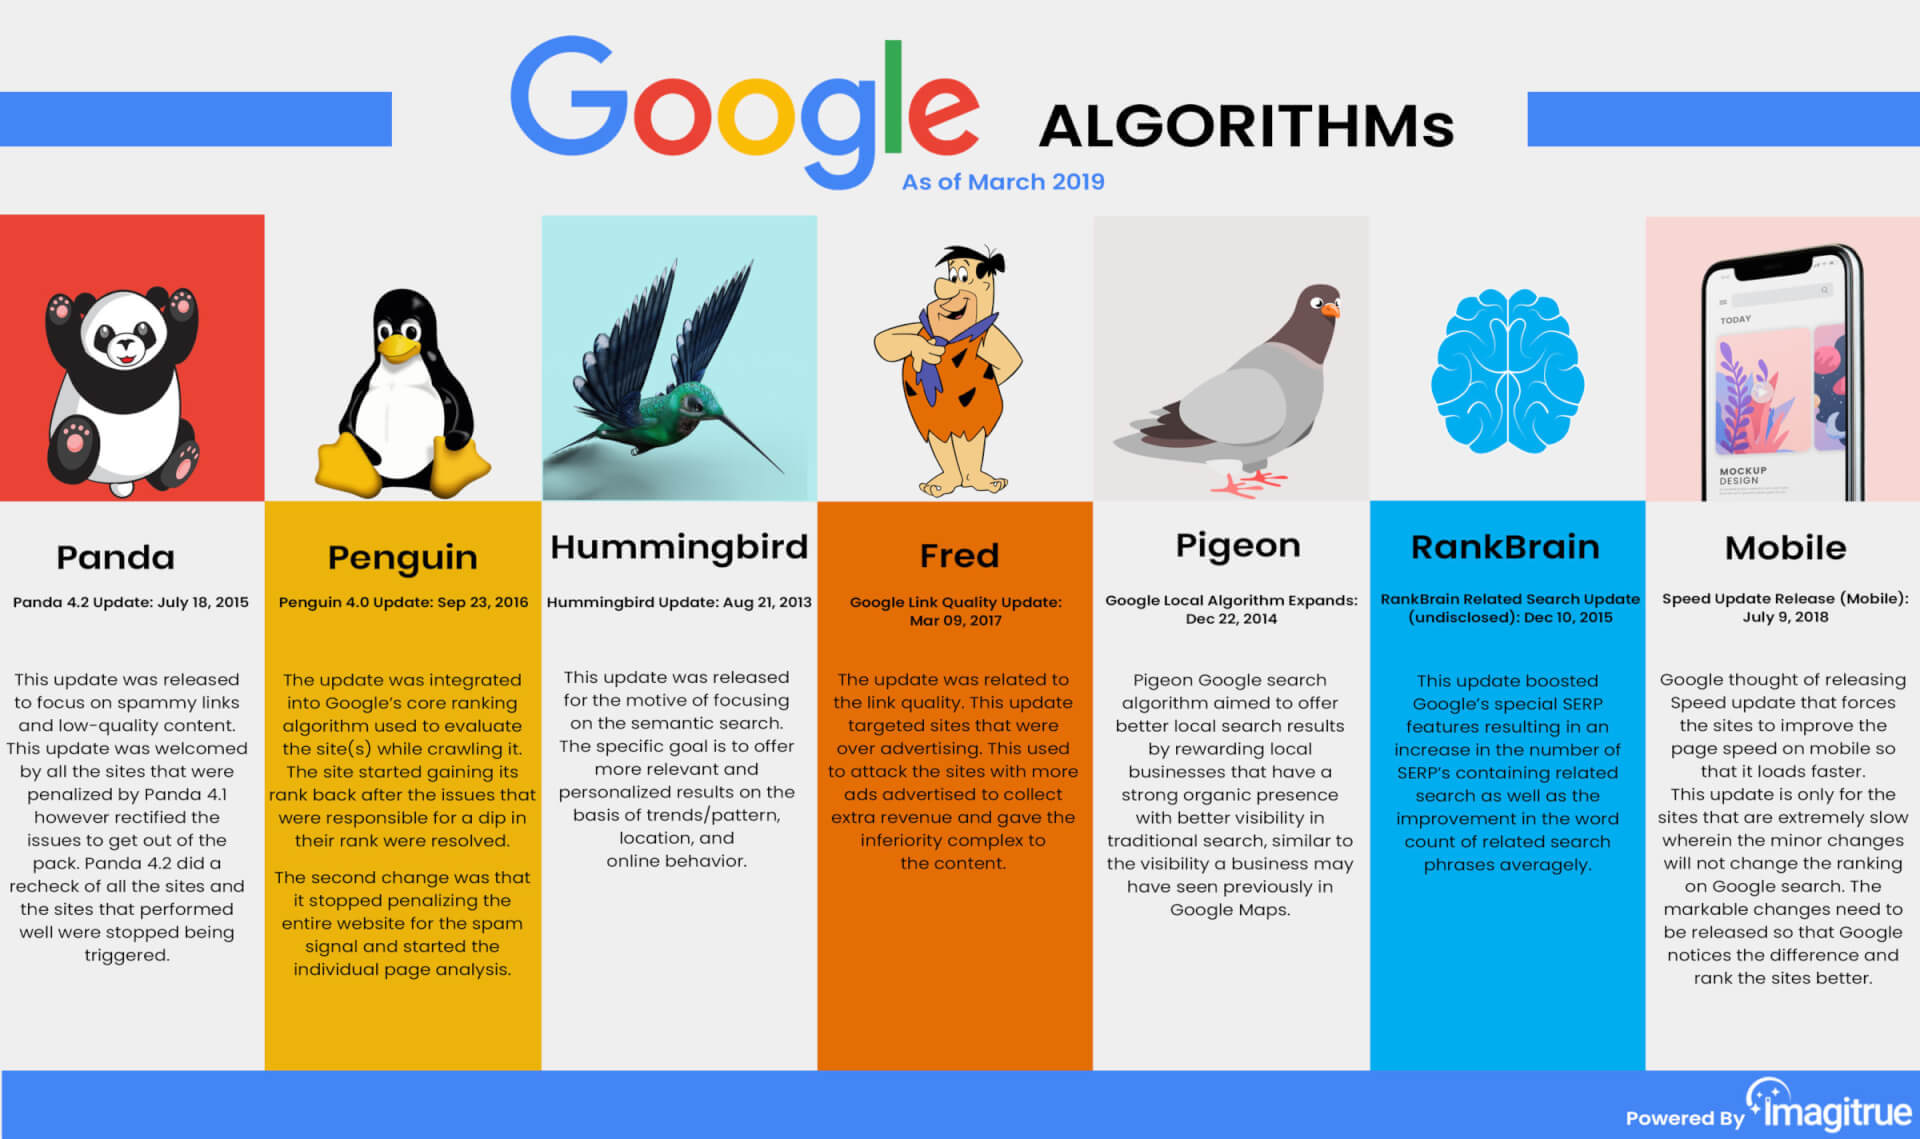 google algorithms